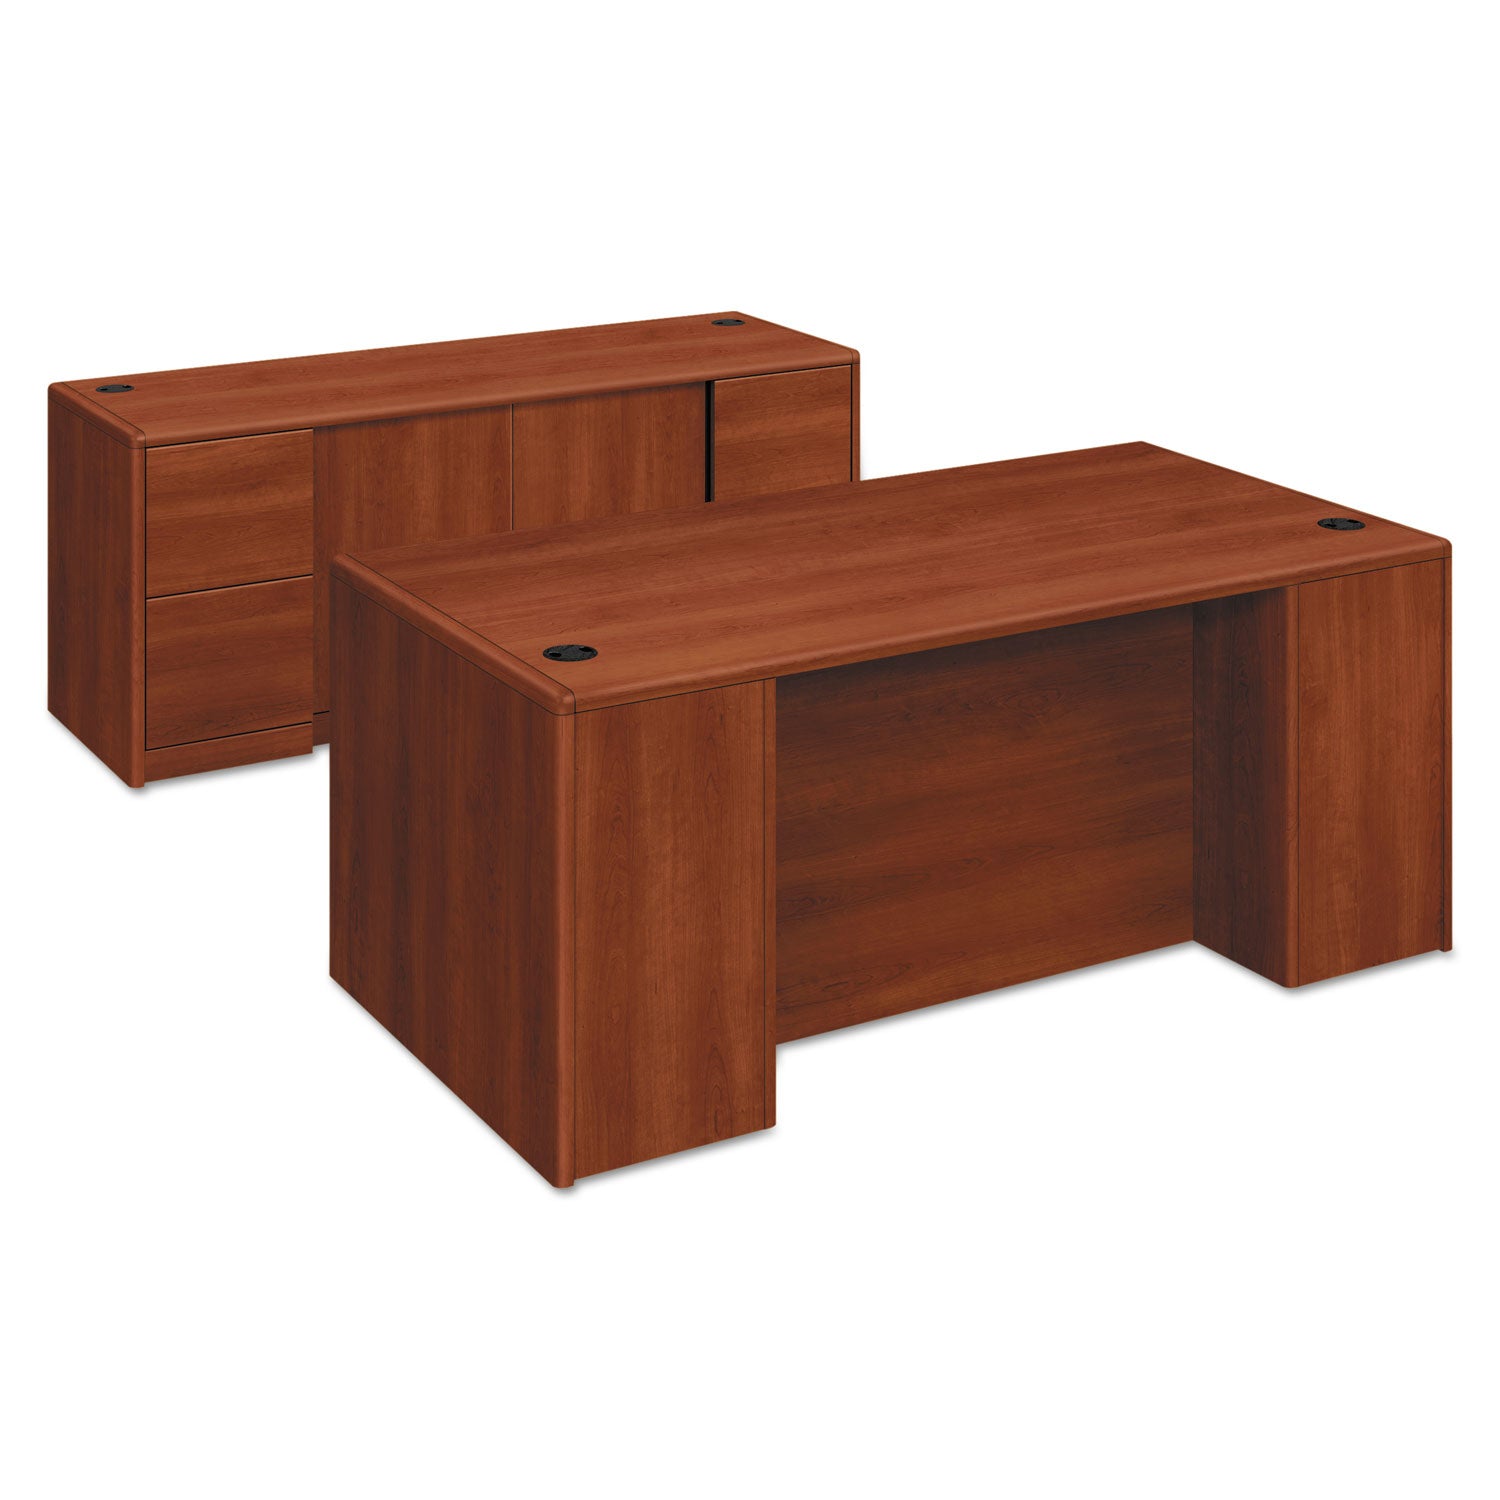 10700 Series Double Pedestal Desk with Full-Height Pedestals, 72" x 36" x 29.5", Cognac - 